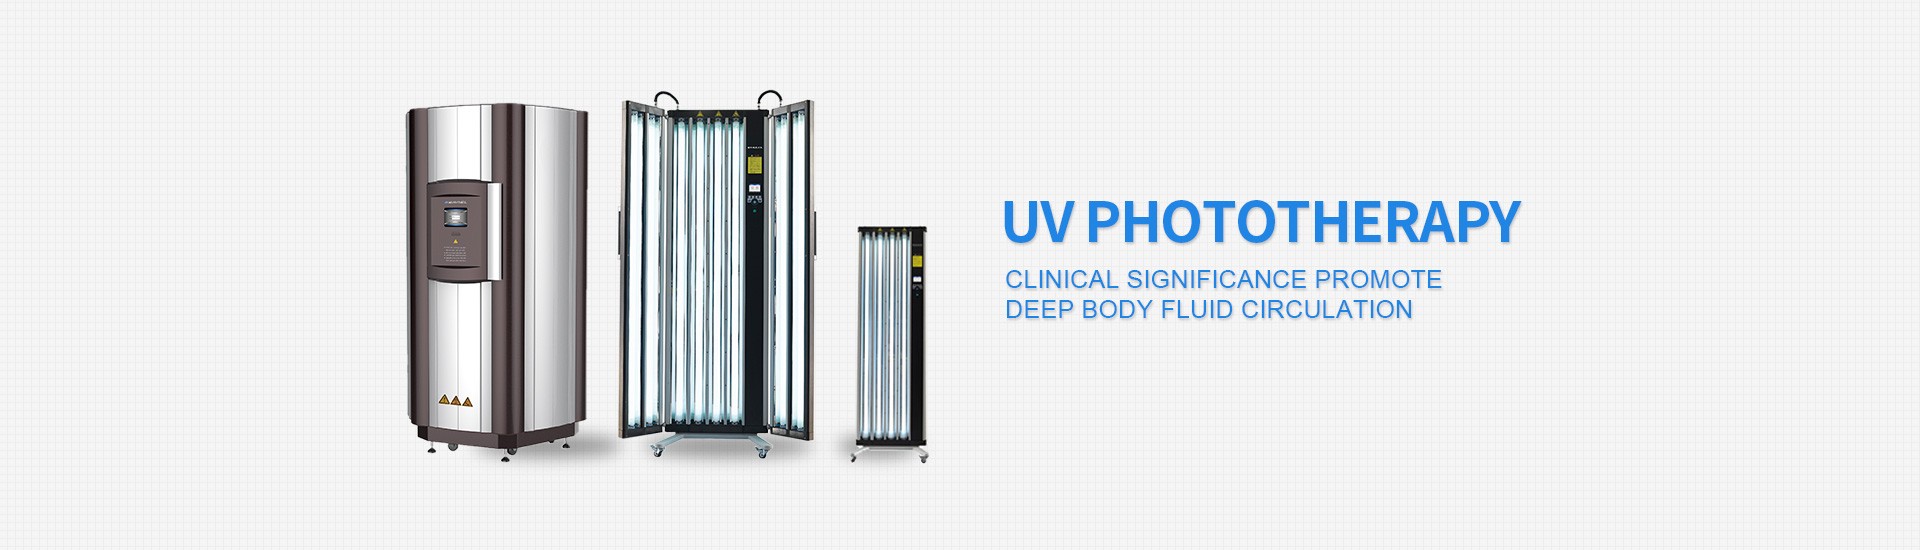 UV Phototherapy